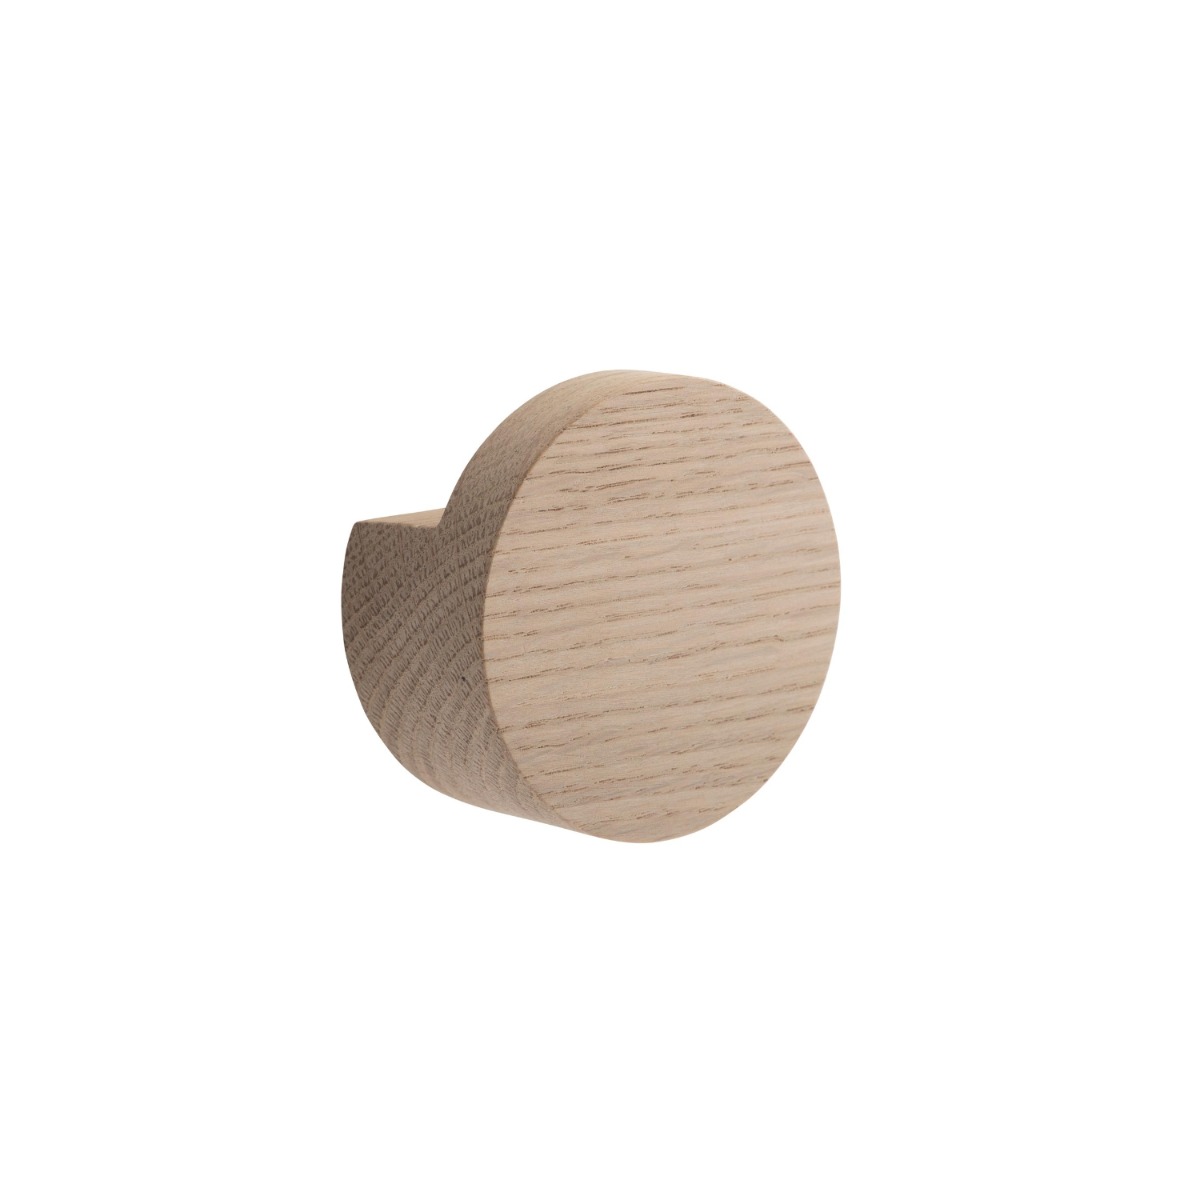 EKTA Knopp Wood Knot Medium 4 cm natur